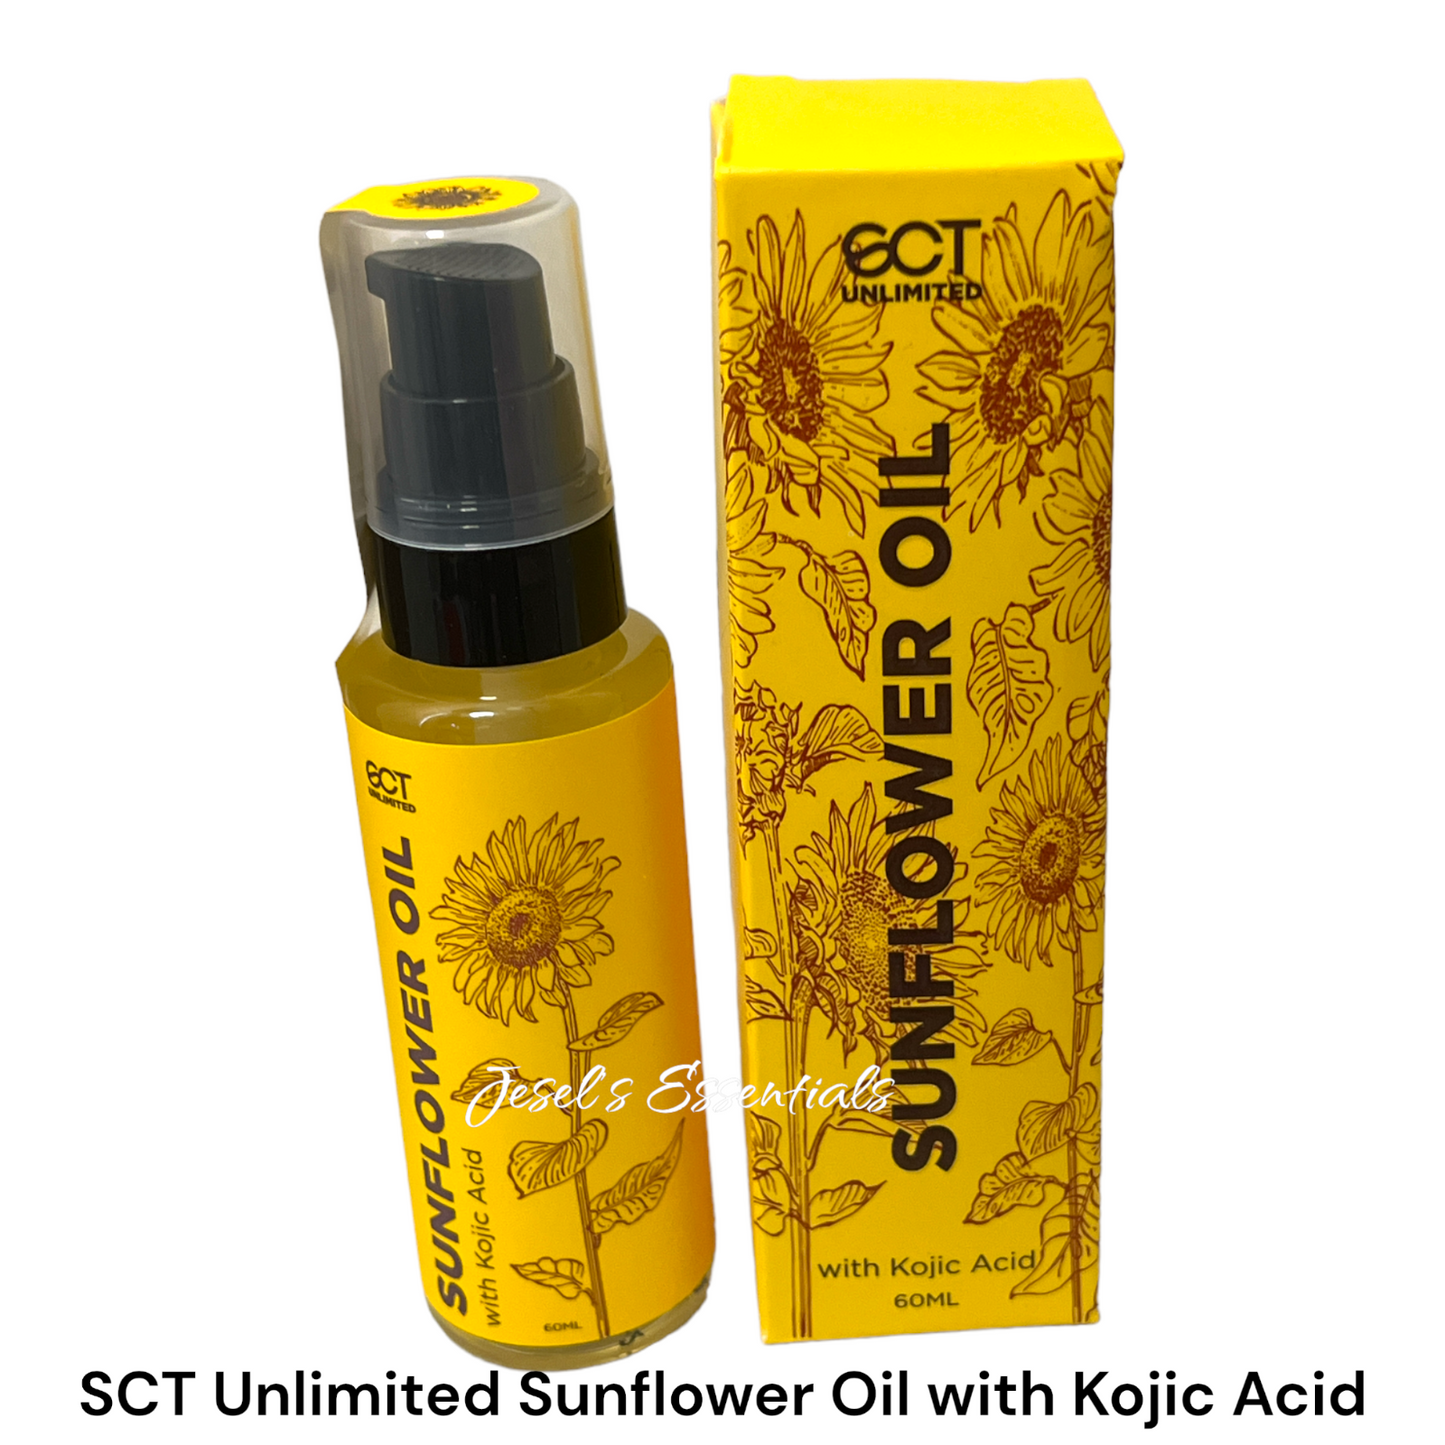 SCT Unlimited Sunflower oil